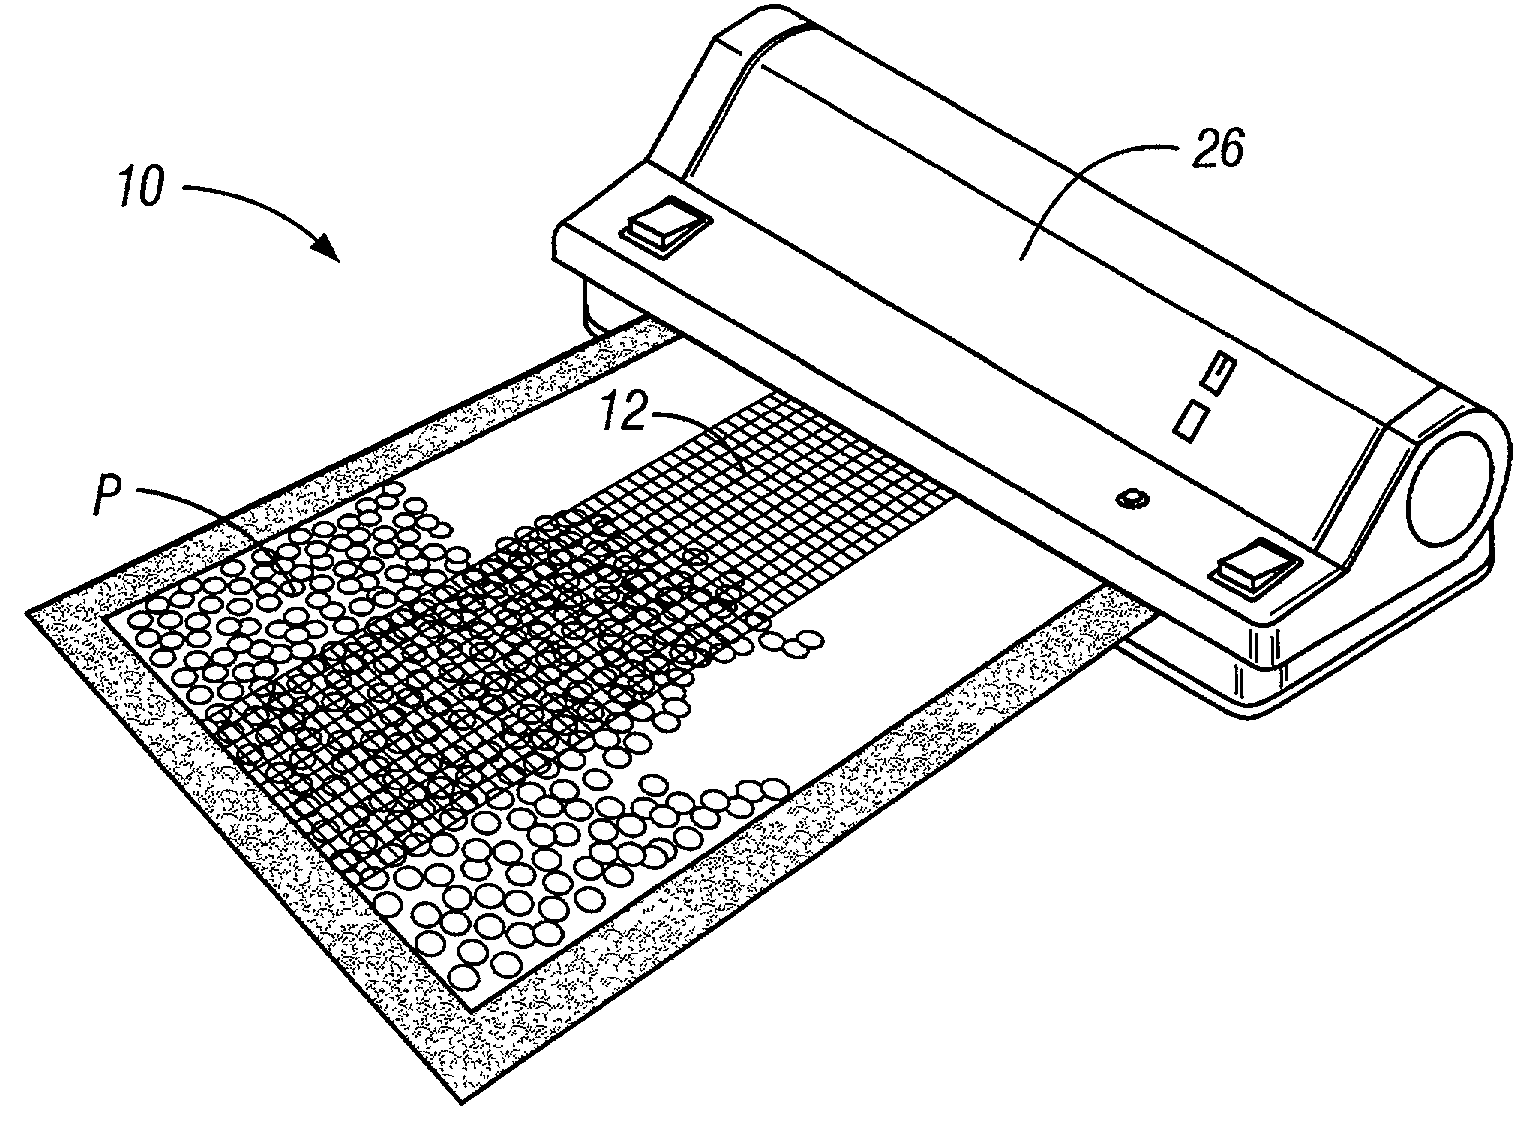 Vacuum sealable bag apparatus and method